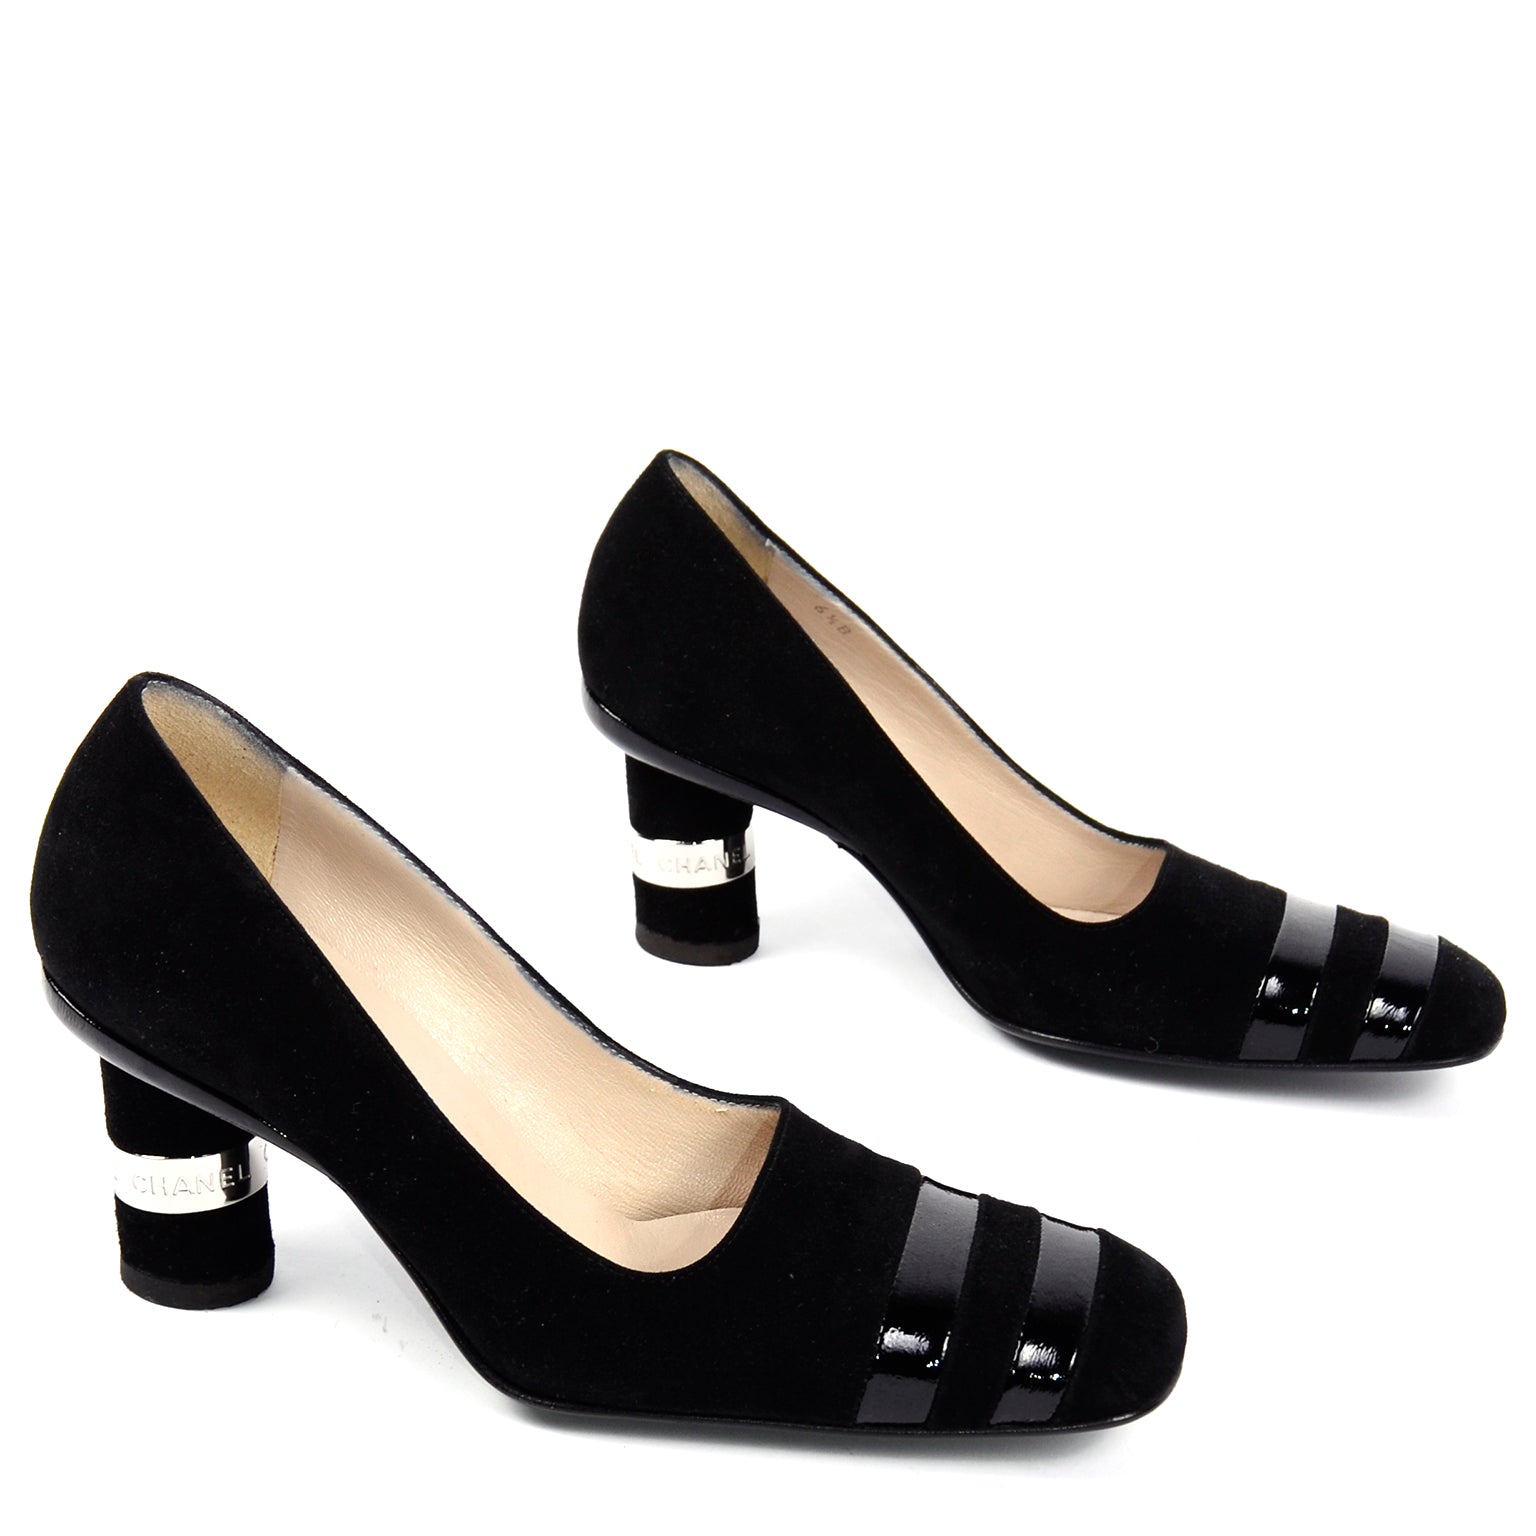 MyRunway | Shop Woolworths Black Ankle Strap Block Heel Sandals for Women  from MyRunway.co.za